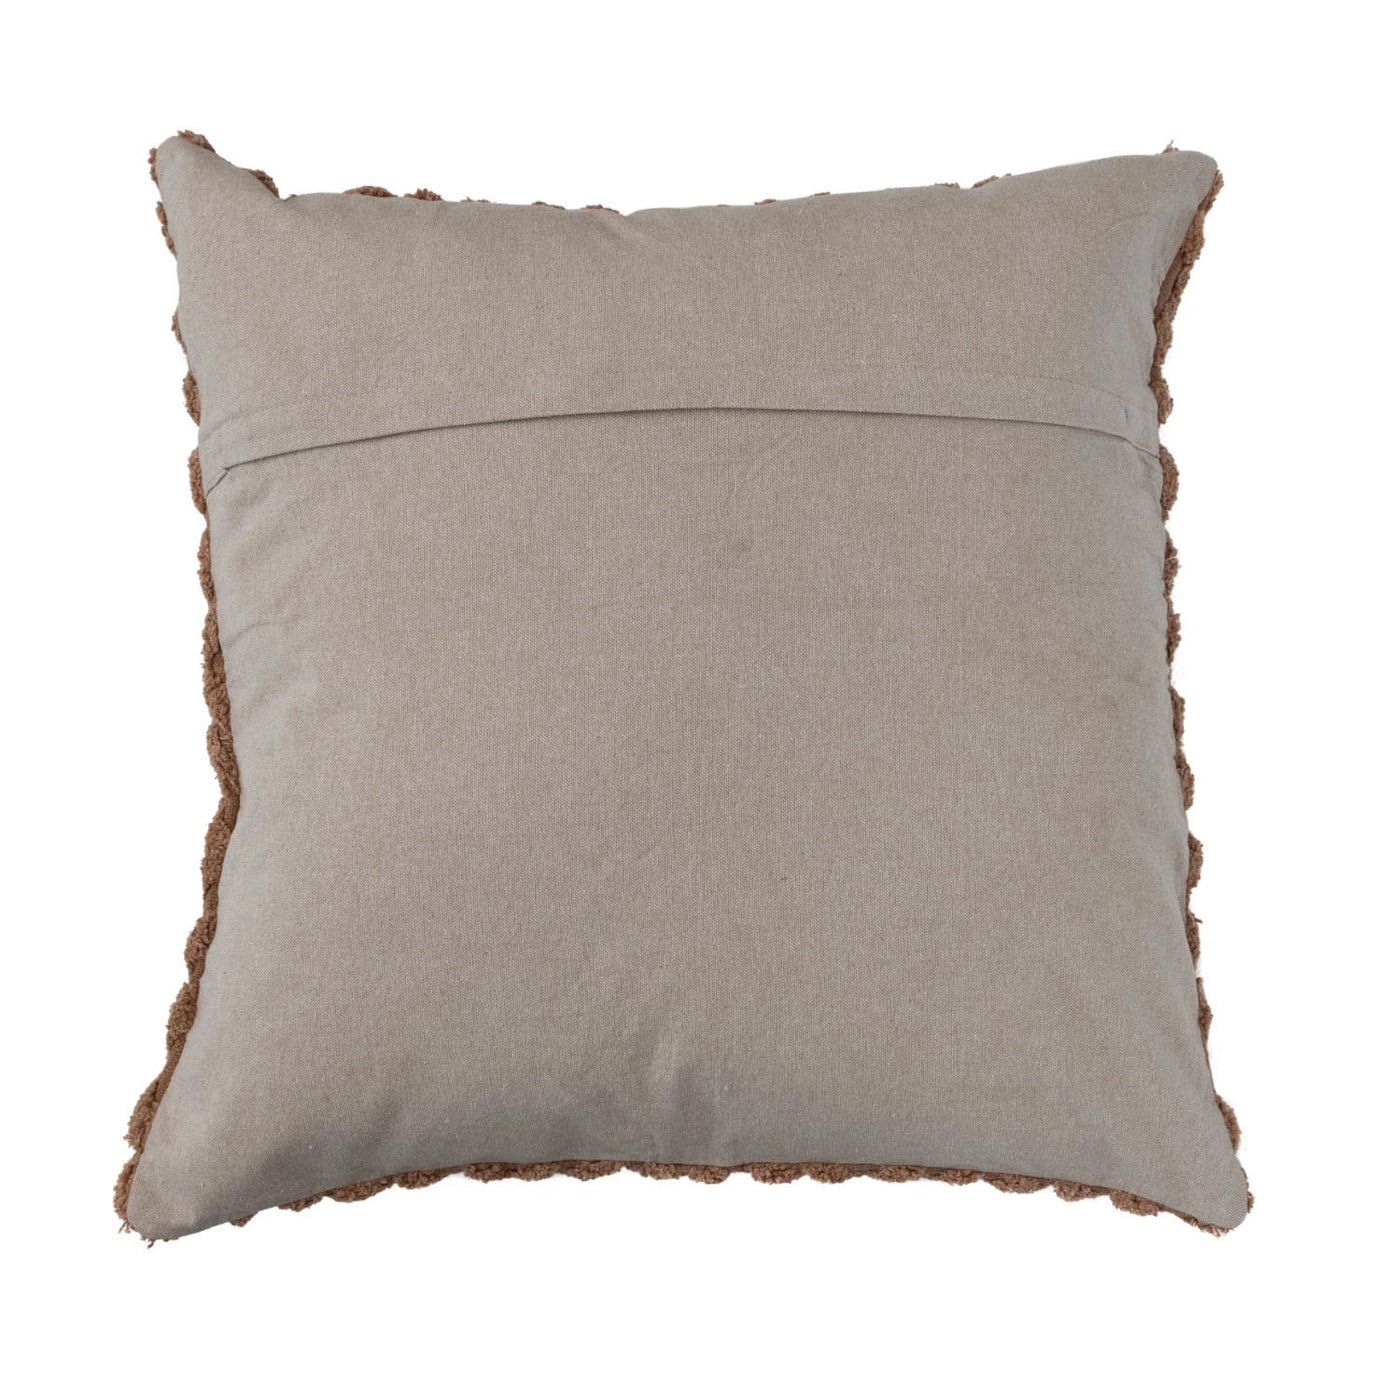 24" Tufted Diamond Pattern Chocolate Brown Pillow